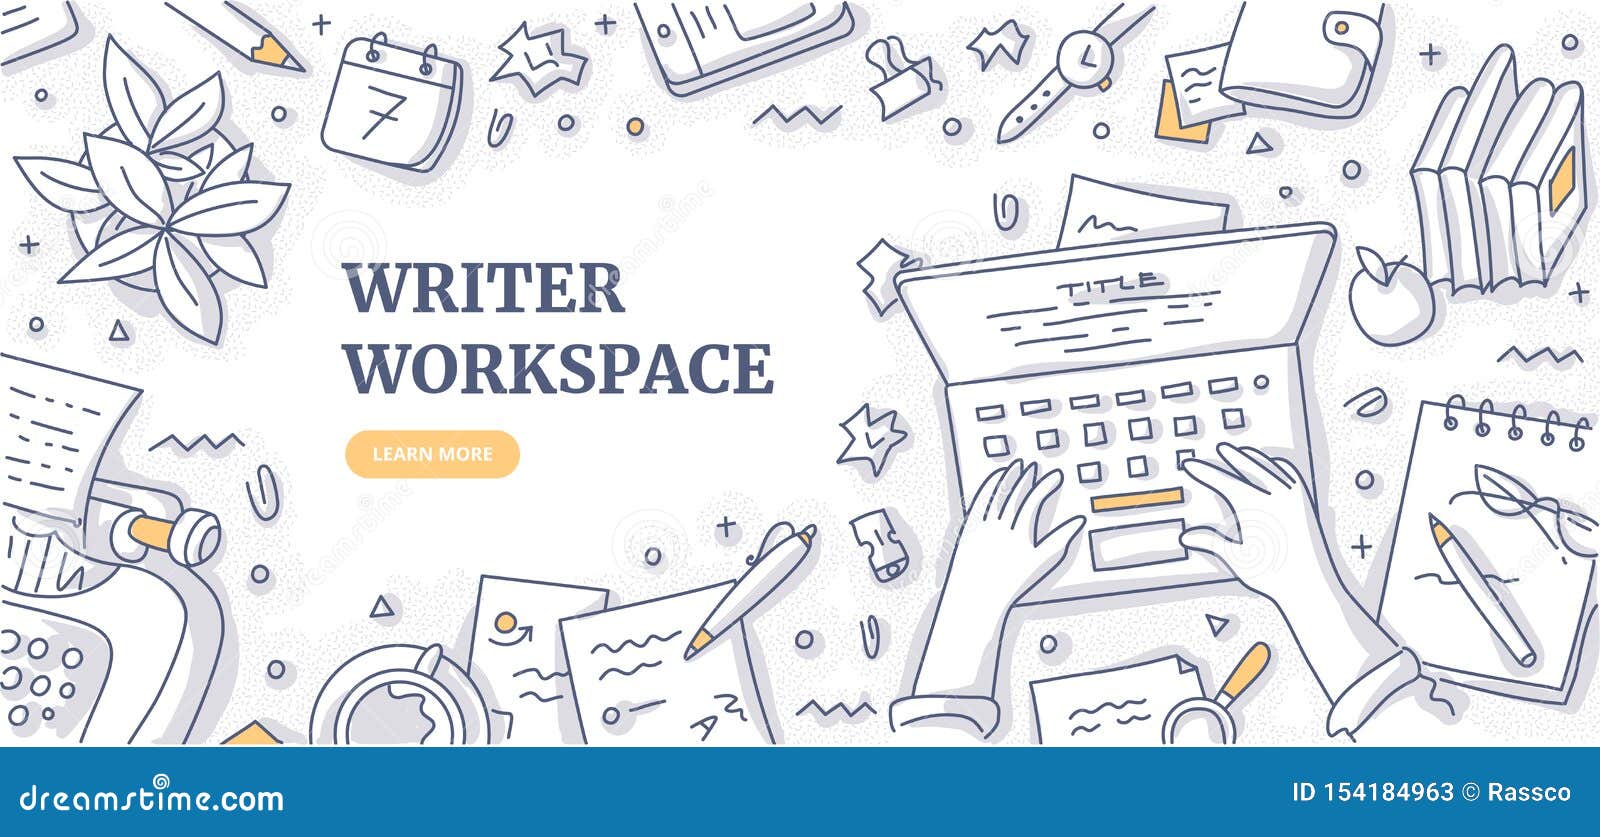 writer workspace doodle background concept